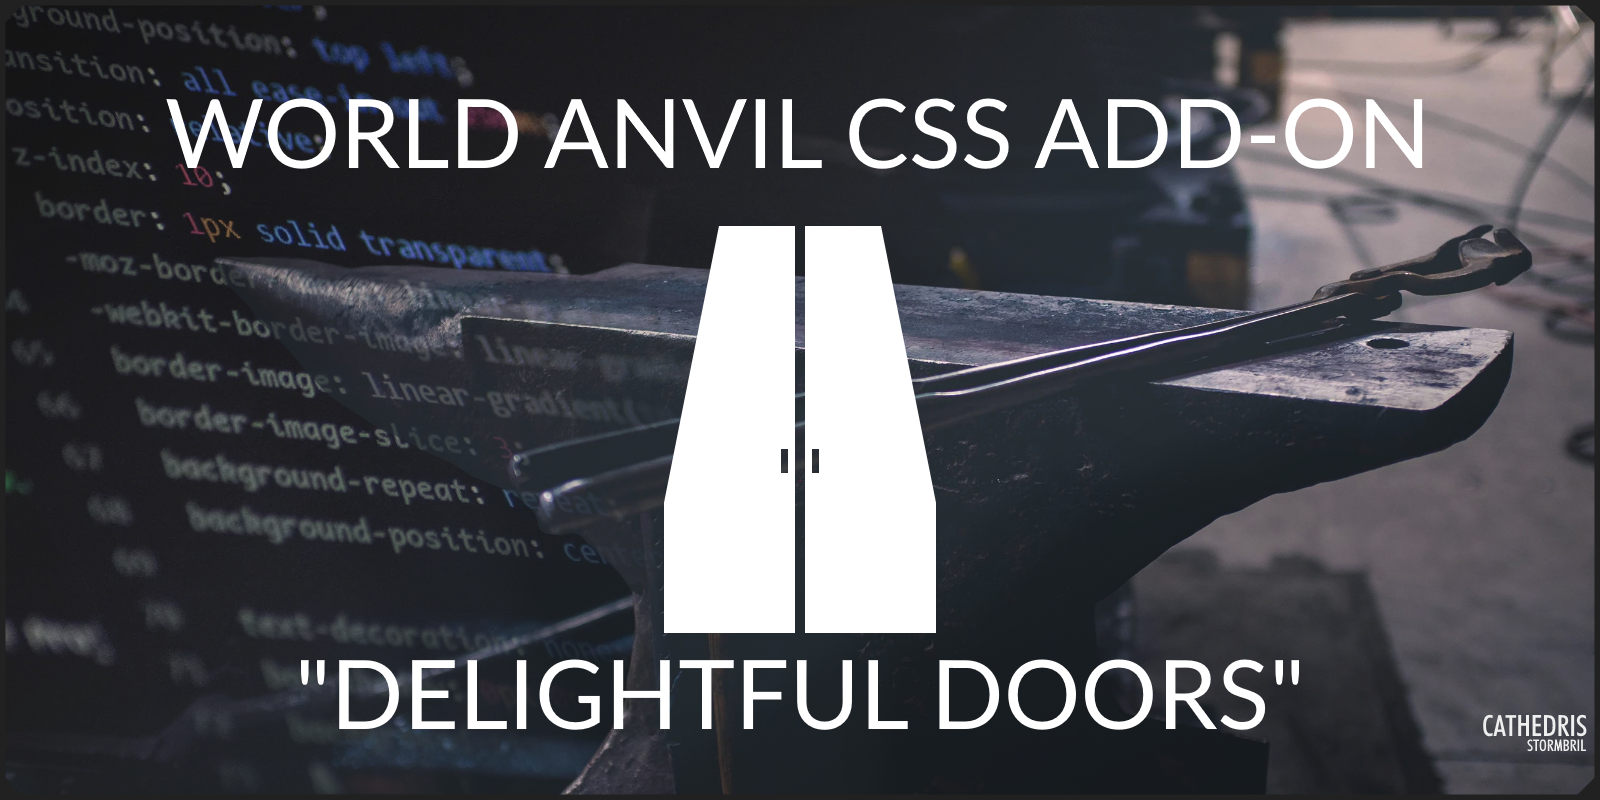 World Anvil CSS add-on: Delightful Doors